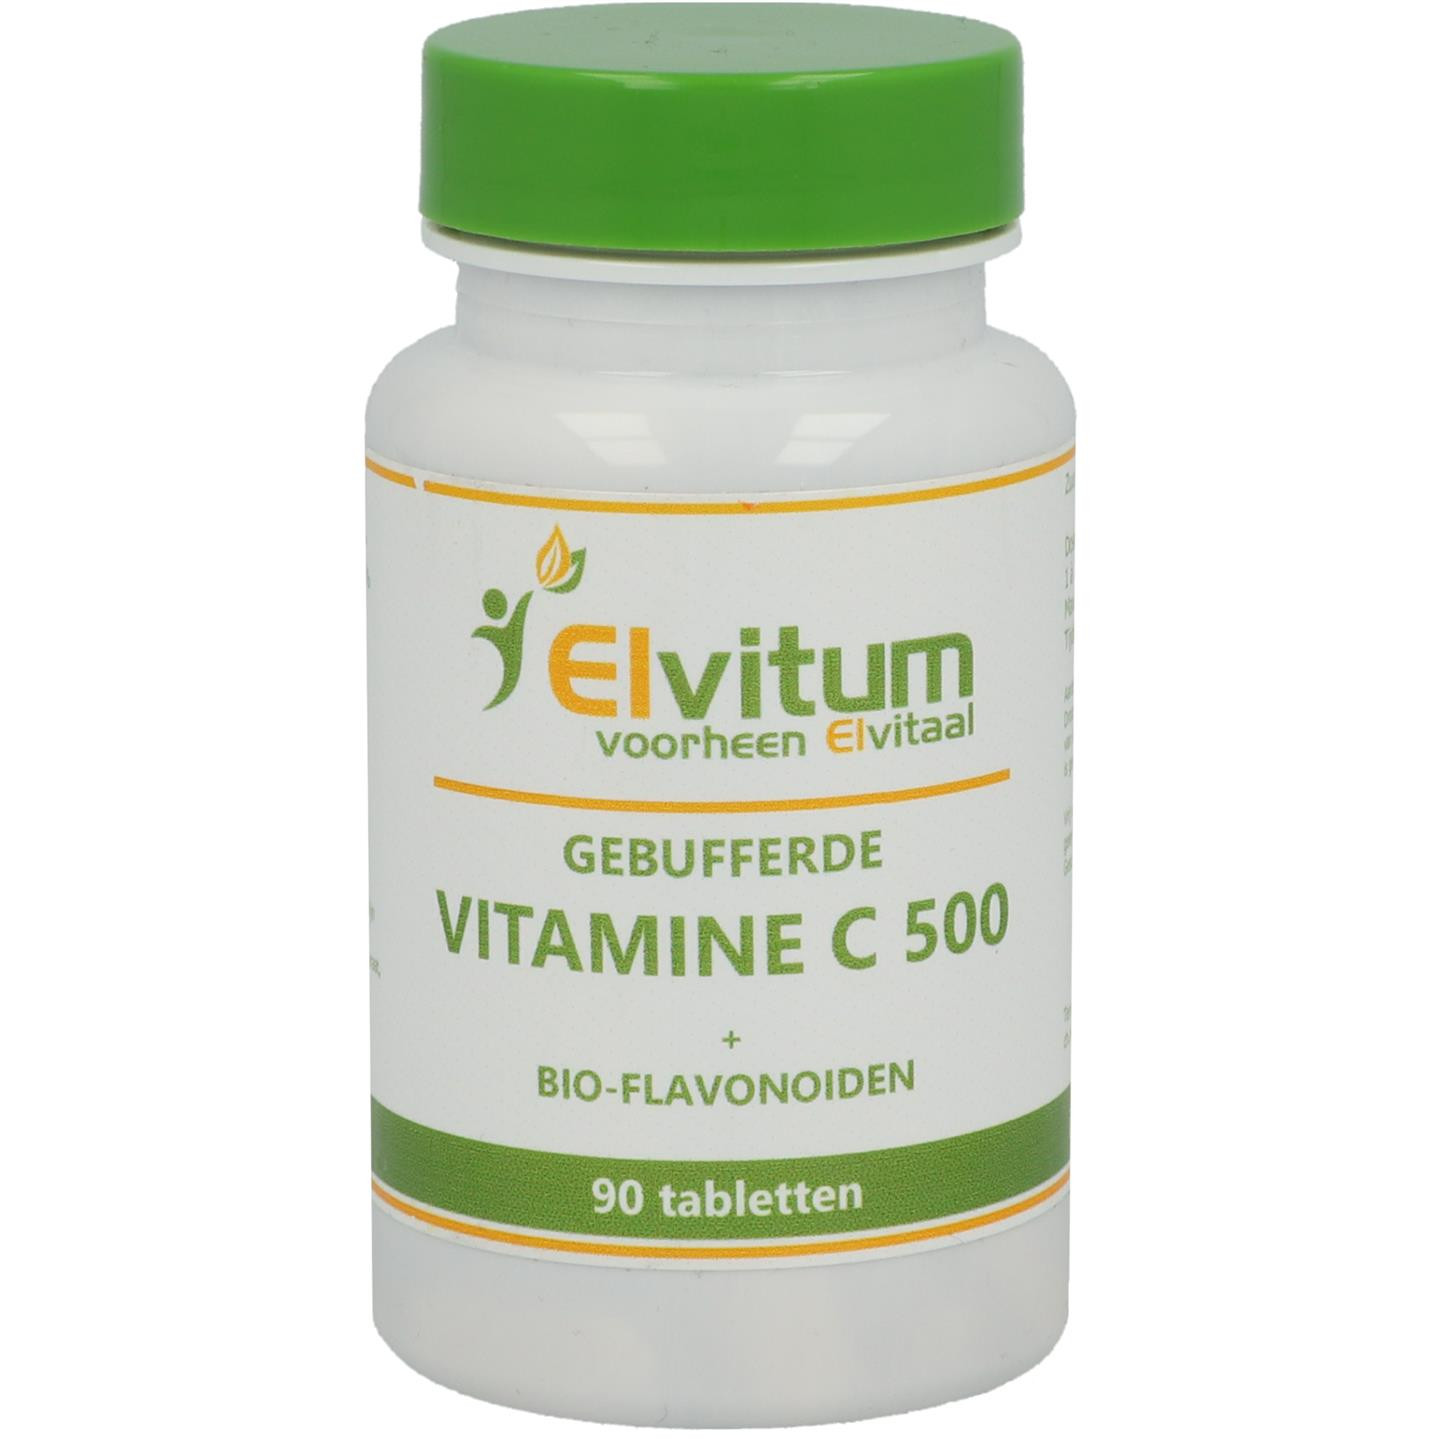 Gebufferde Vitamine C 500 + Bio-flavonoïden